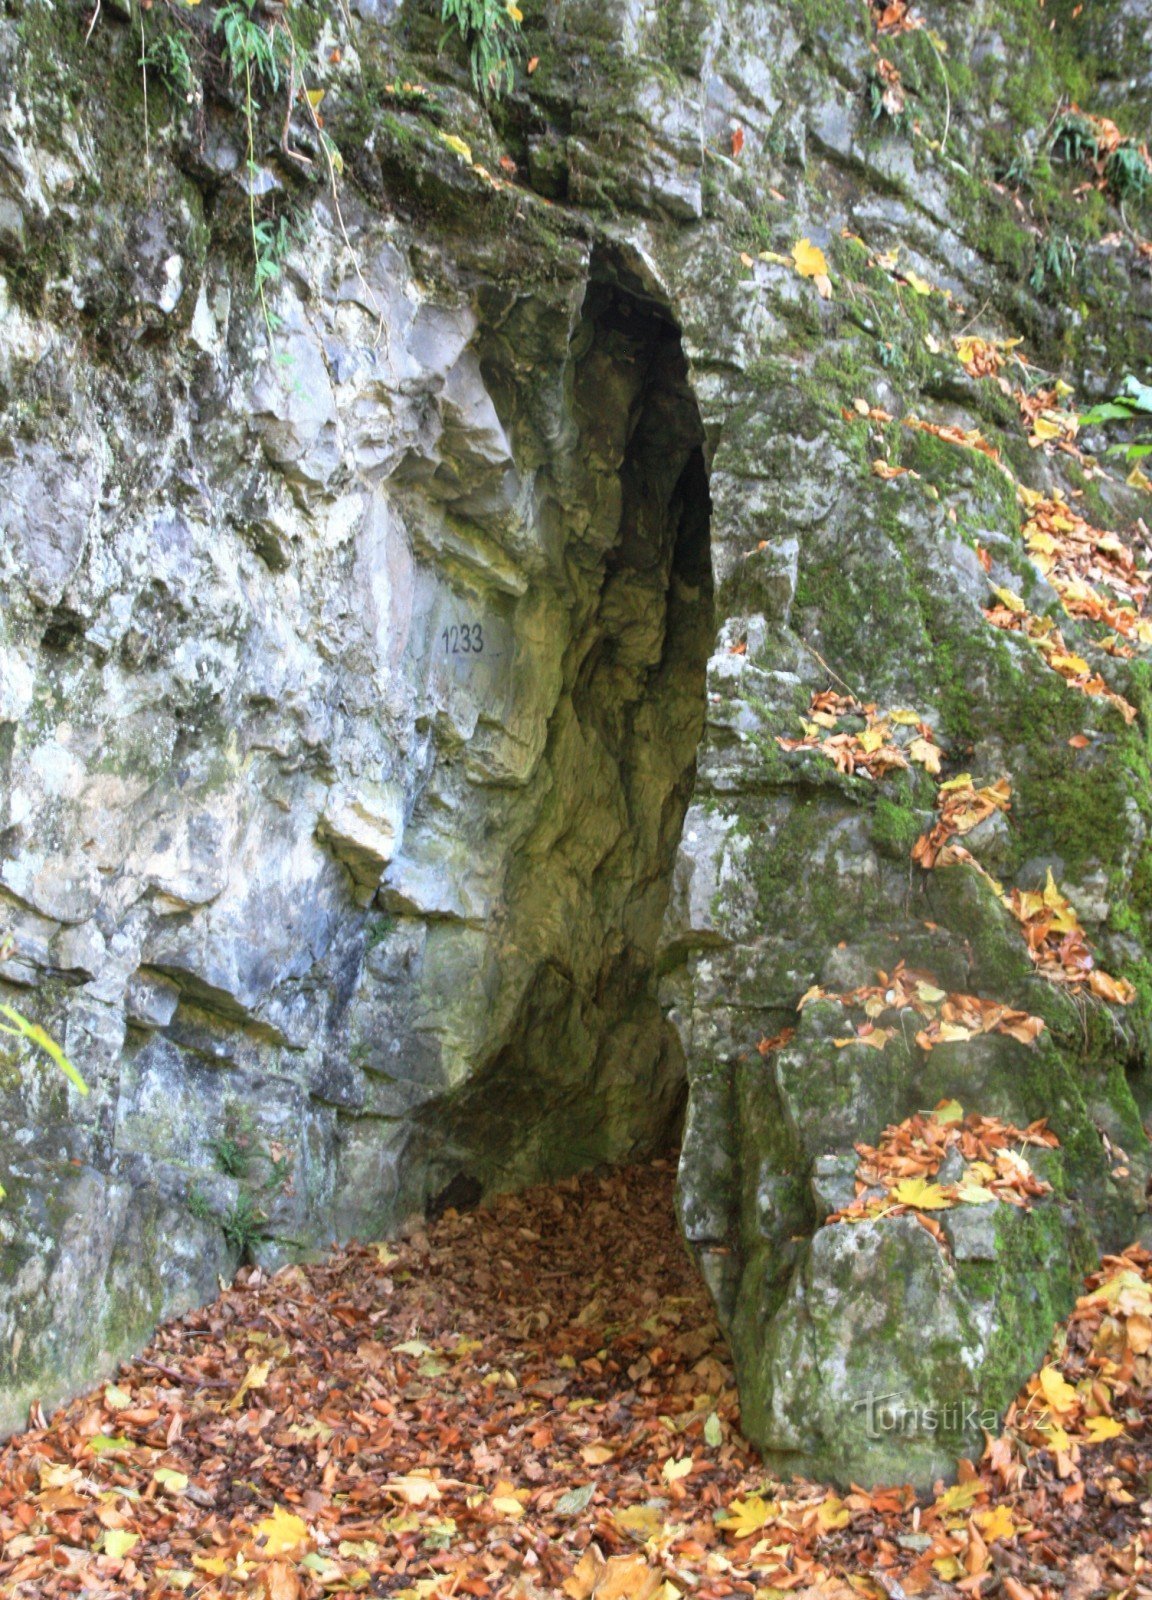 Una delle altre grotte sopra Švýcárna nel Josefovské údolí